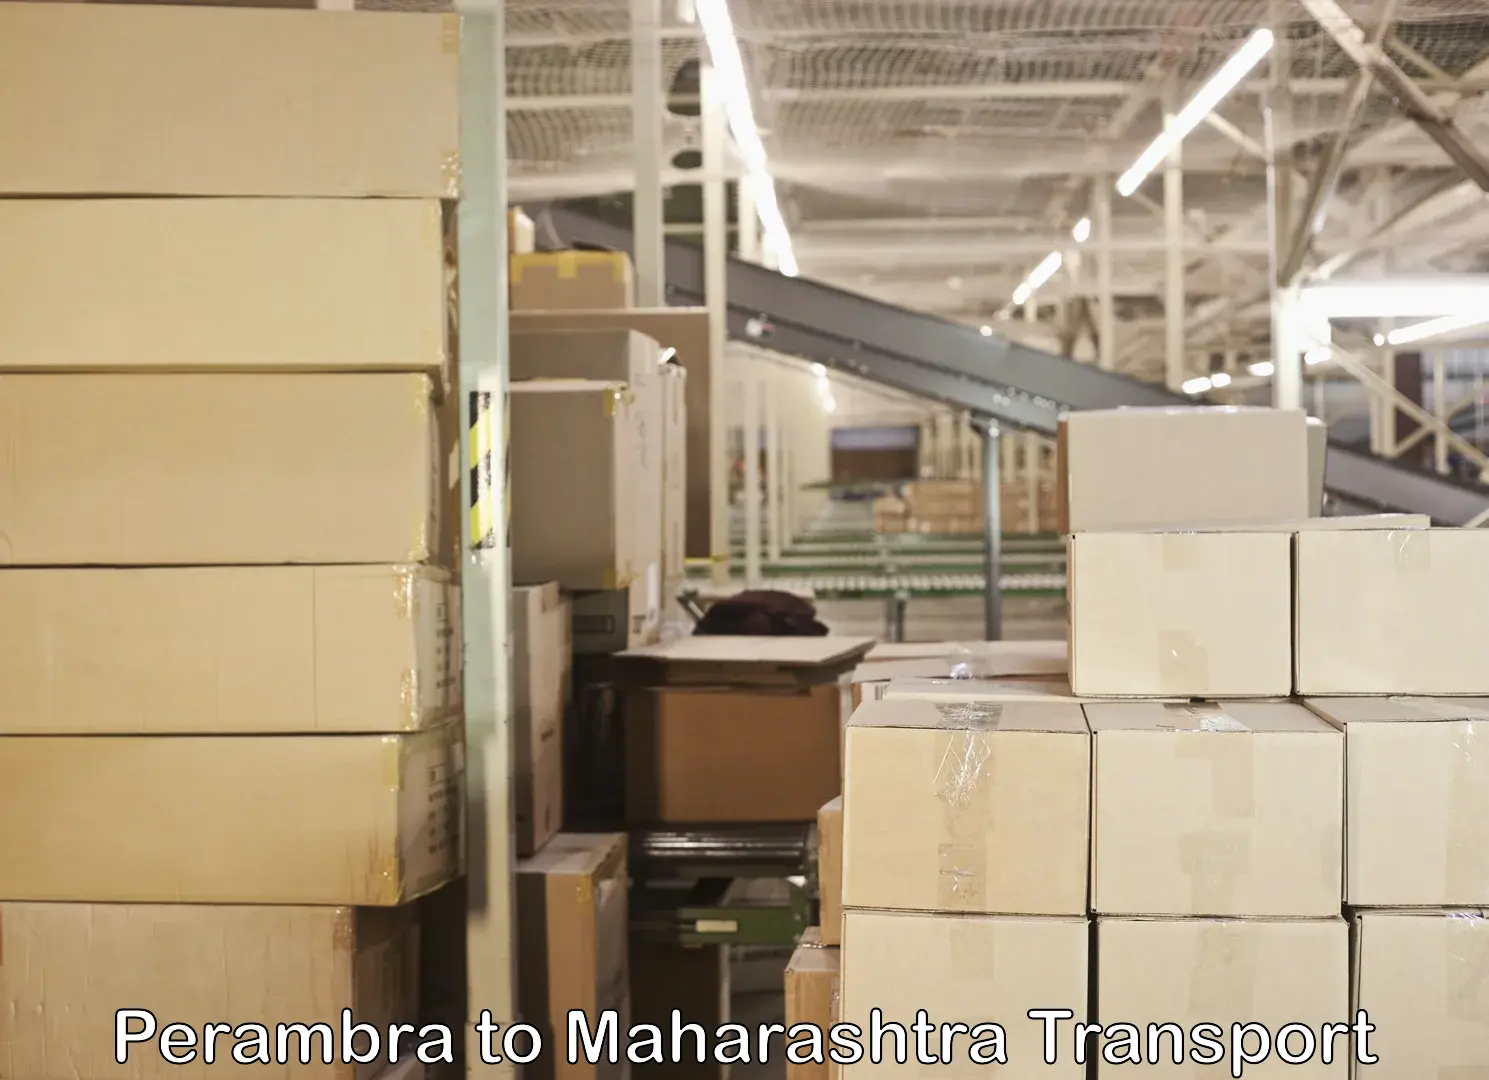 Truck transport companies in India Perambra to Maharashtra